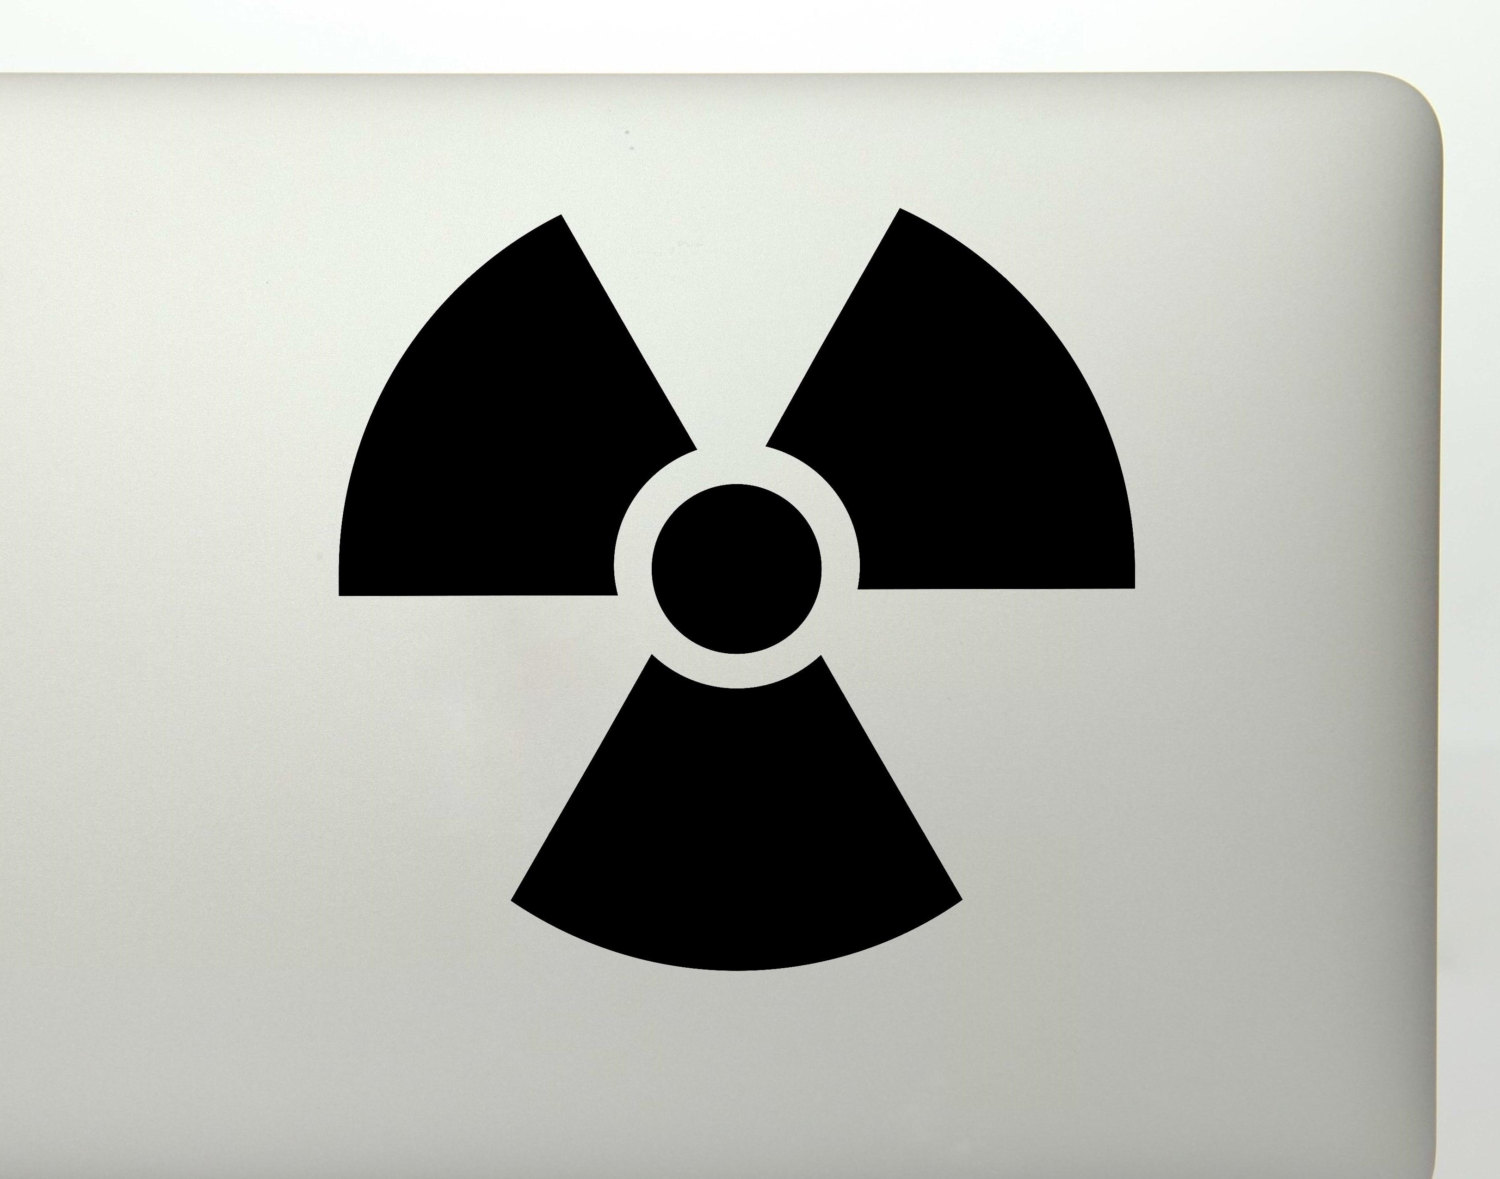 Radioactive symbol die cut vinyl decal sticker for cars